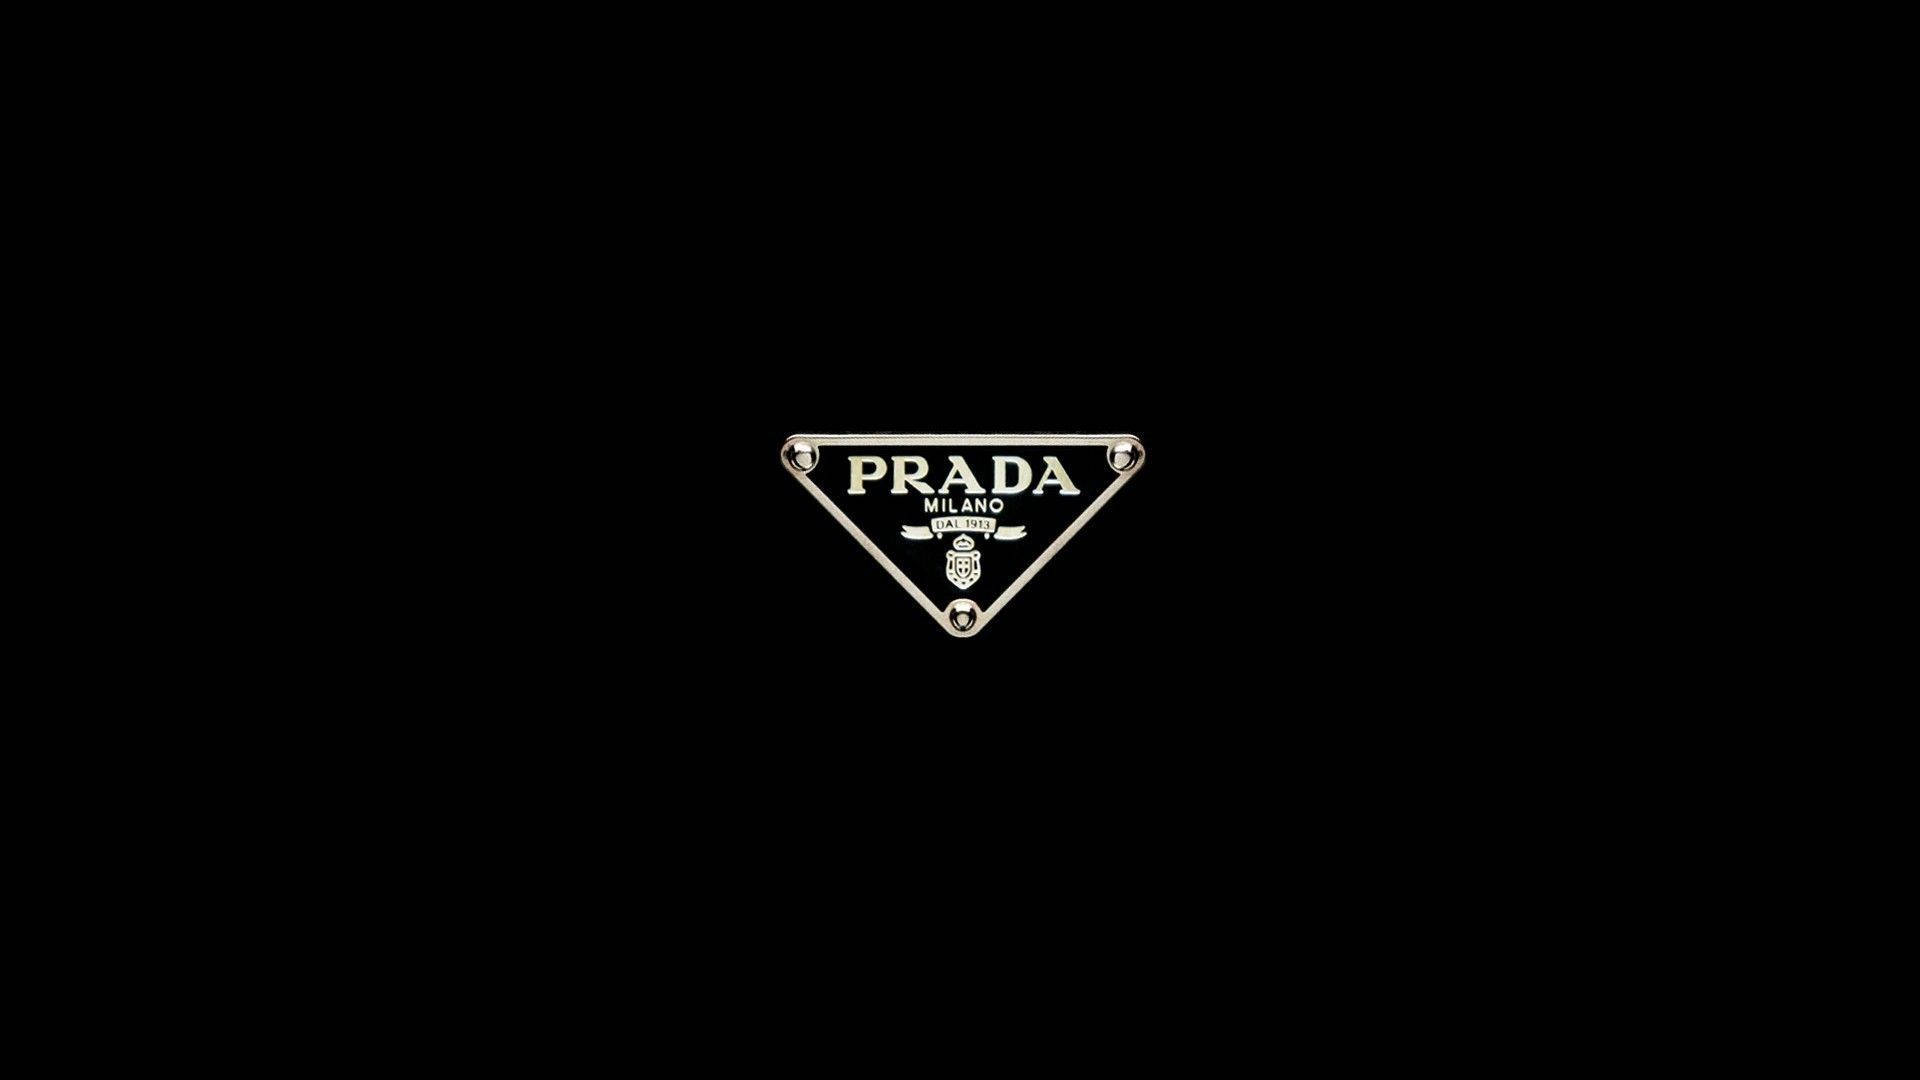 Minimalist Prada fashion logo wallpaper.